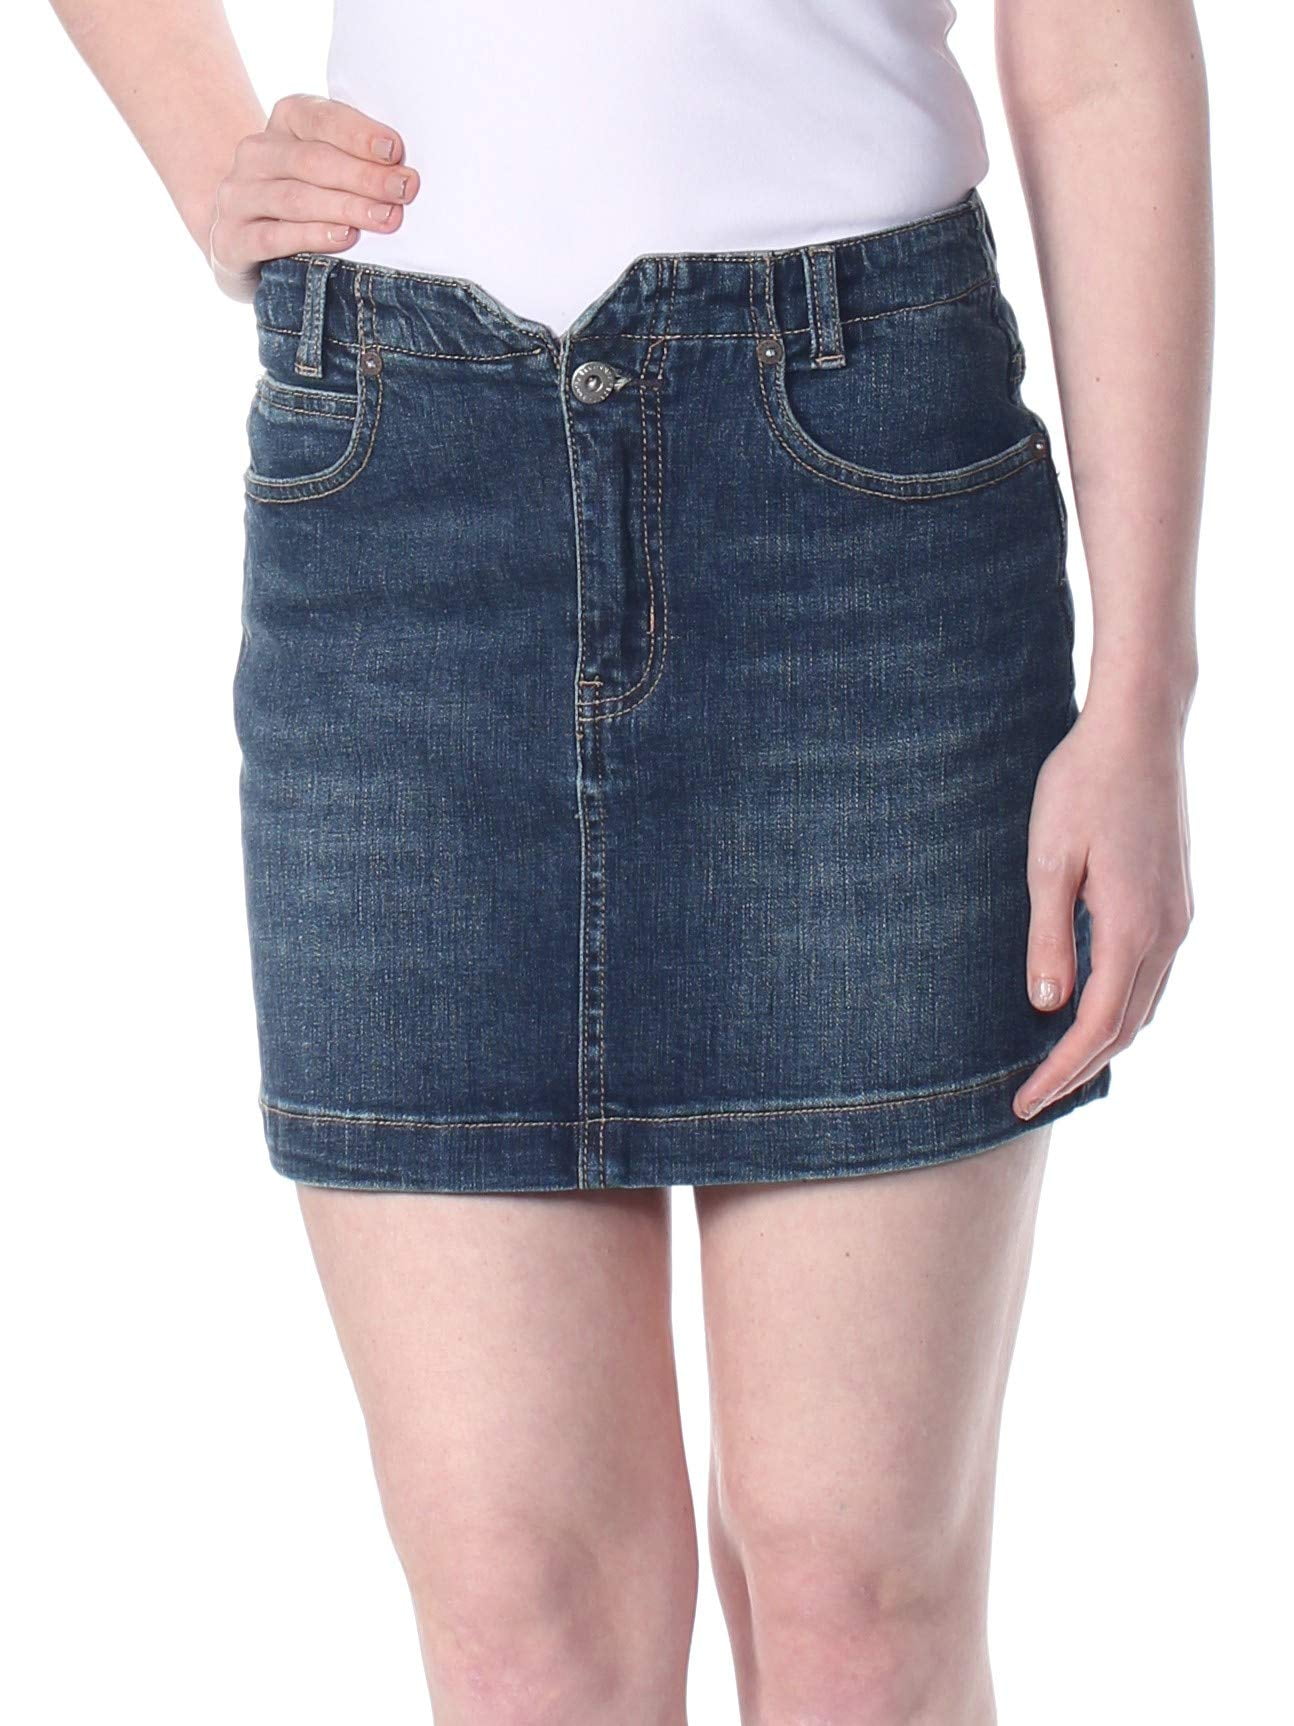 Free People - Women's Creased Mini Denim Jean Skirt 28 - Walmart.com ...